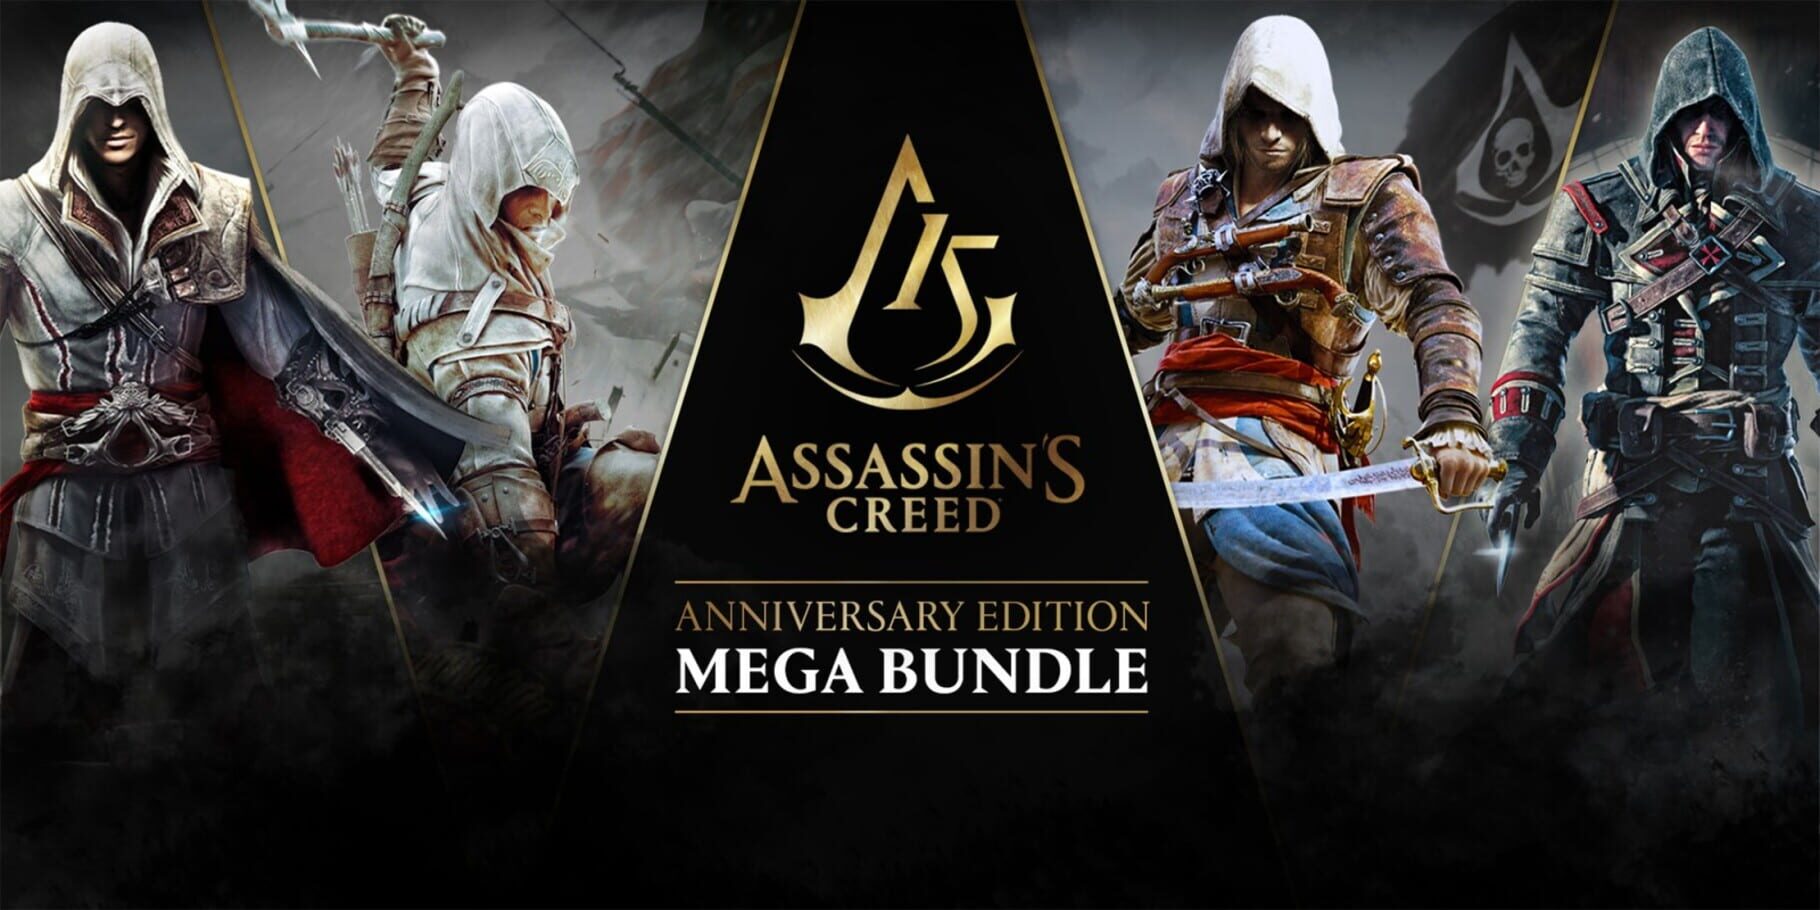 Assassin's Creed: Anniversary Edition Mega Bundle artwork